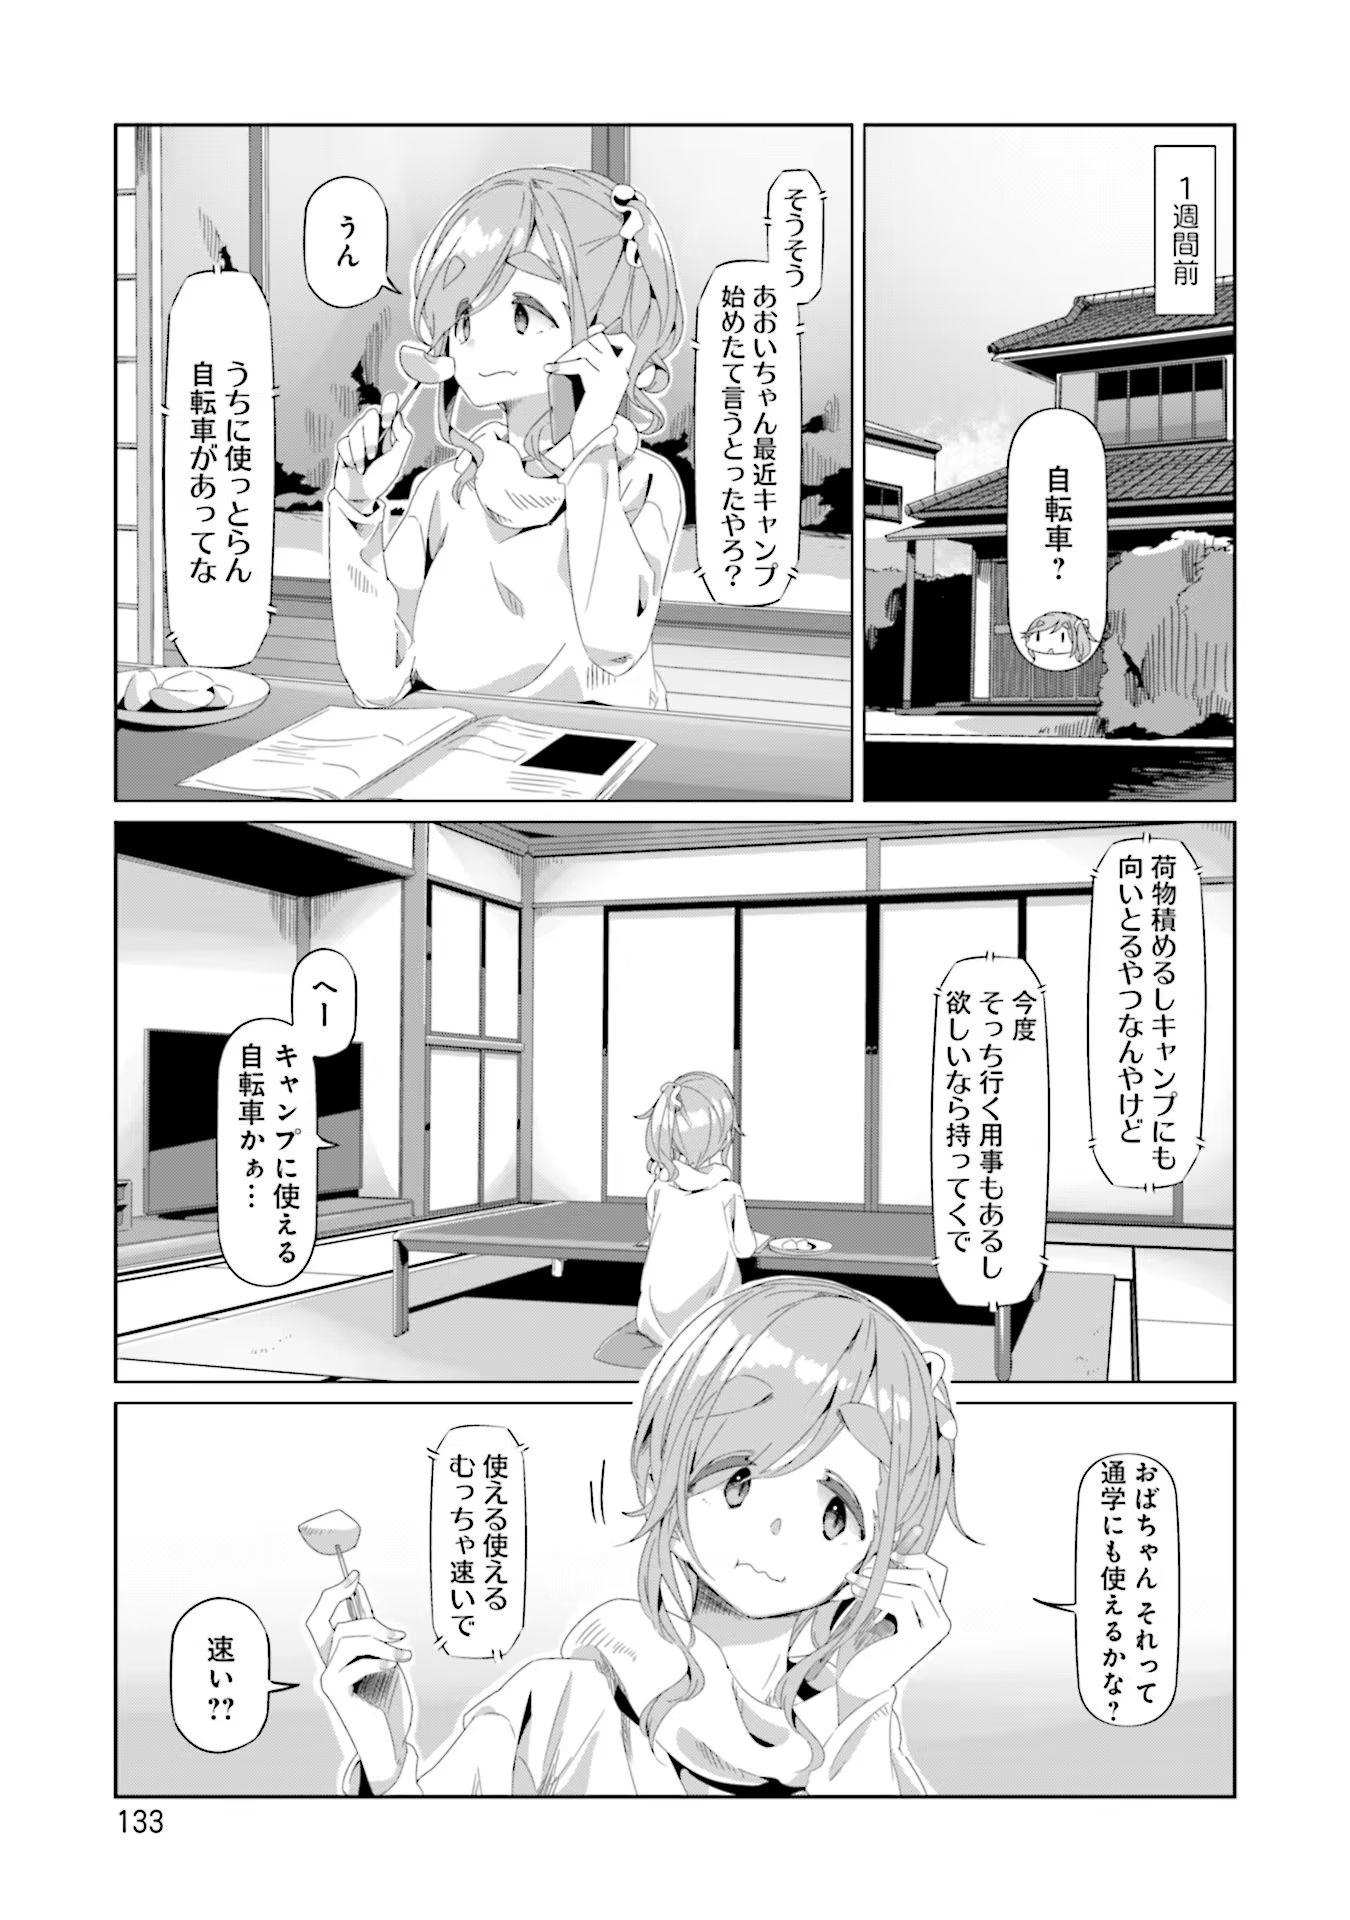 Yuru Camp - Chapter 75 - Page 1